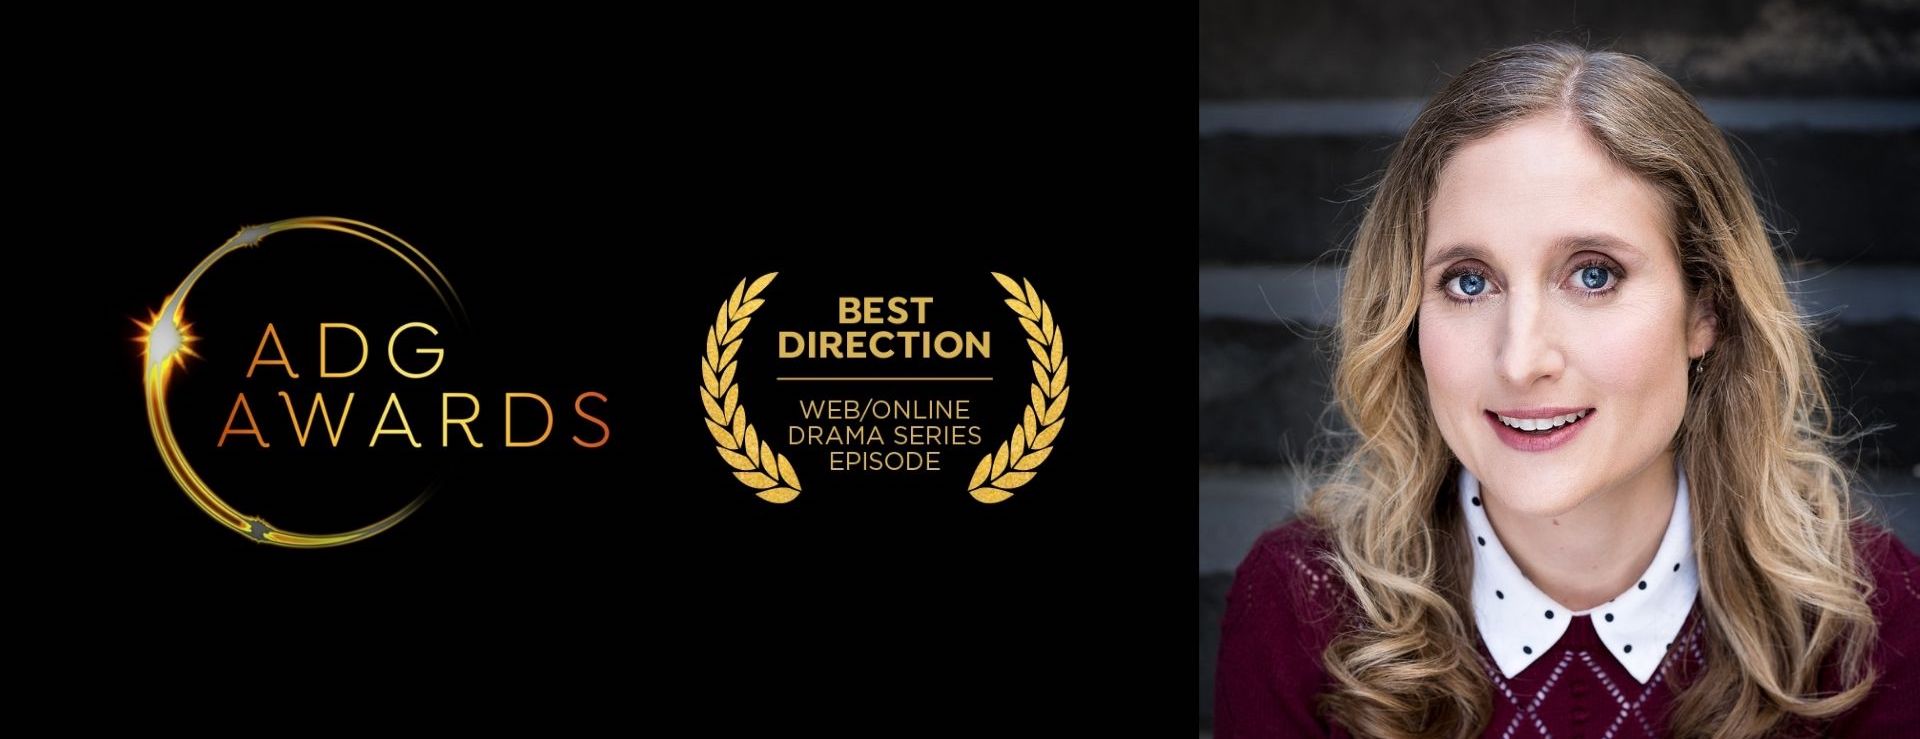 Image of director Megan Riakos and the Australian Directors Guild Awards logo and laurels for nomination for best direction web/online drama series episode